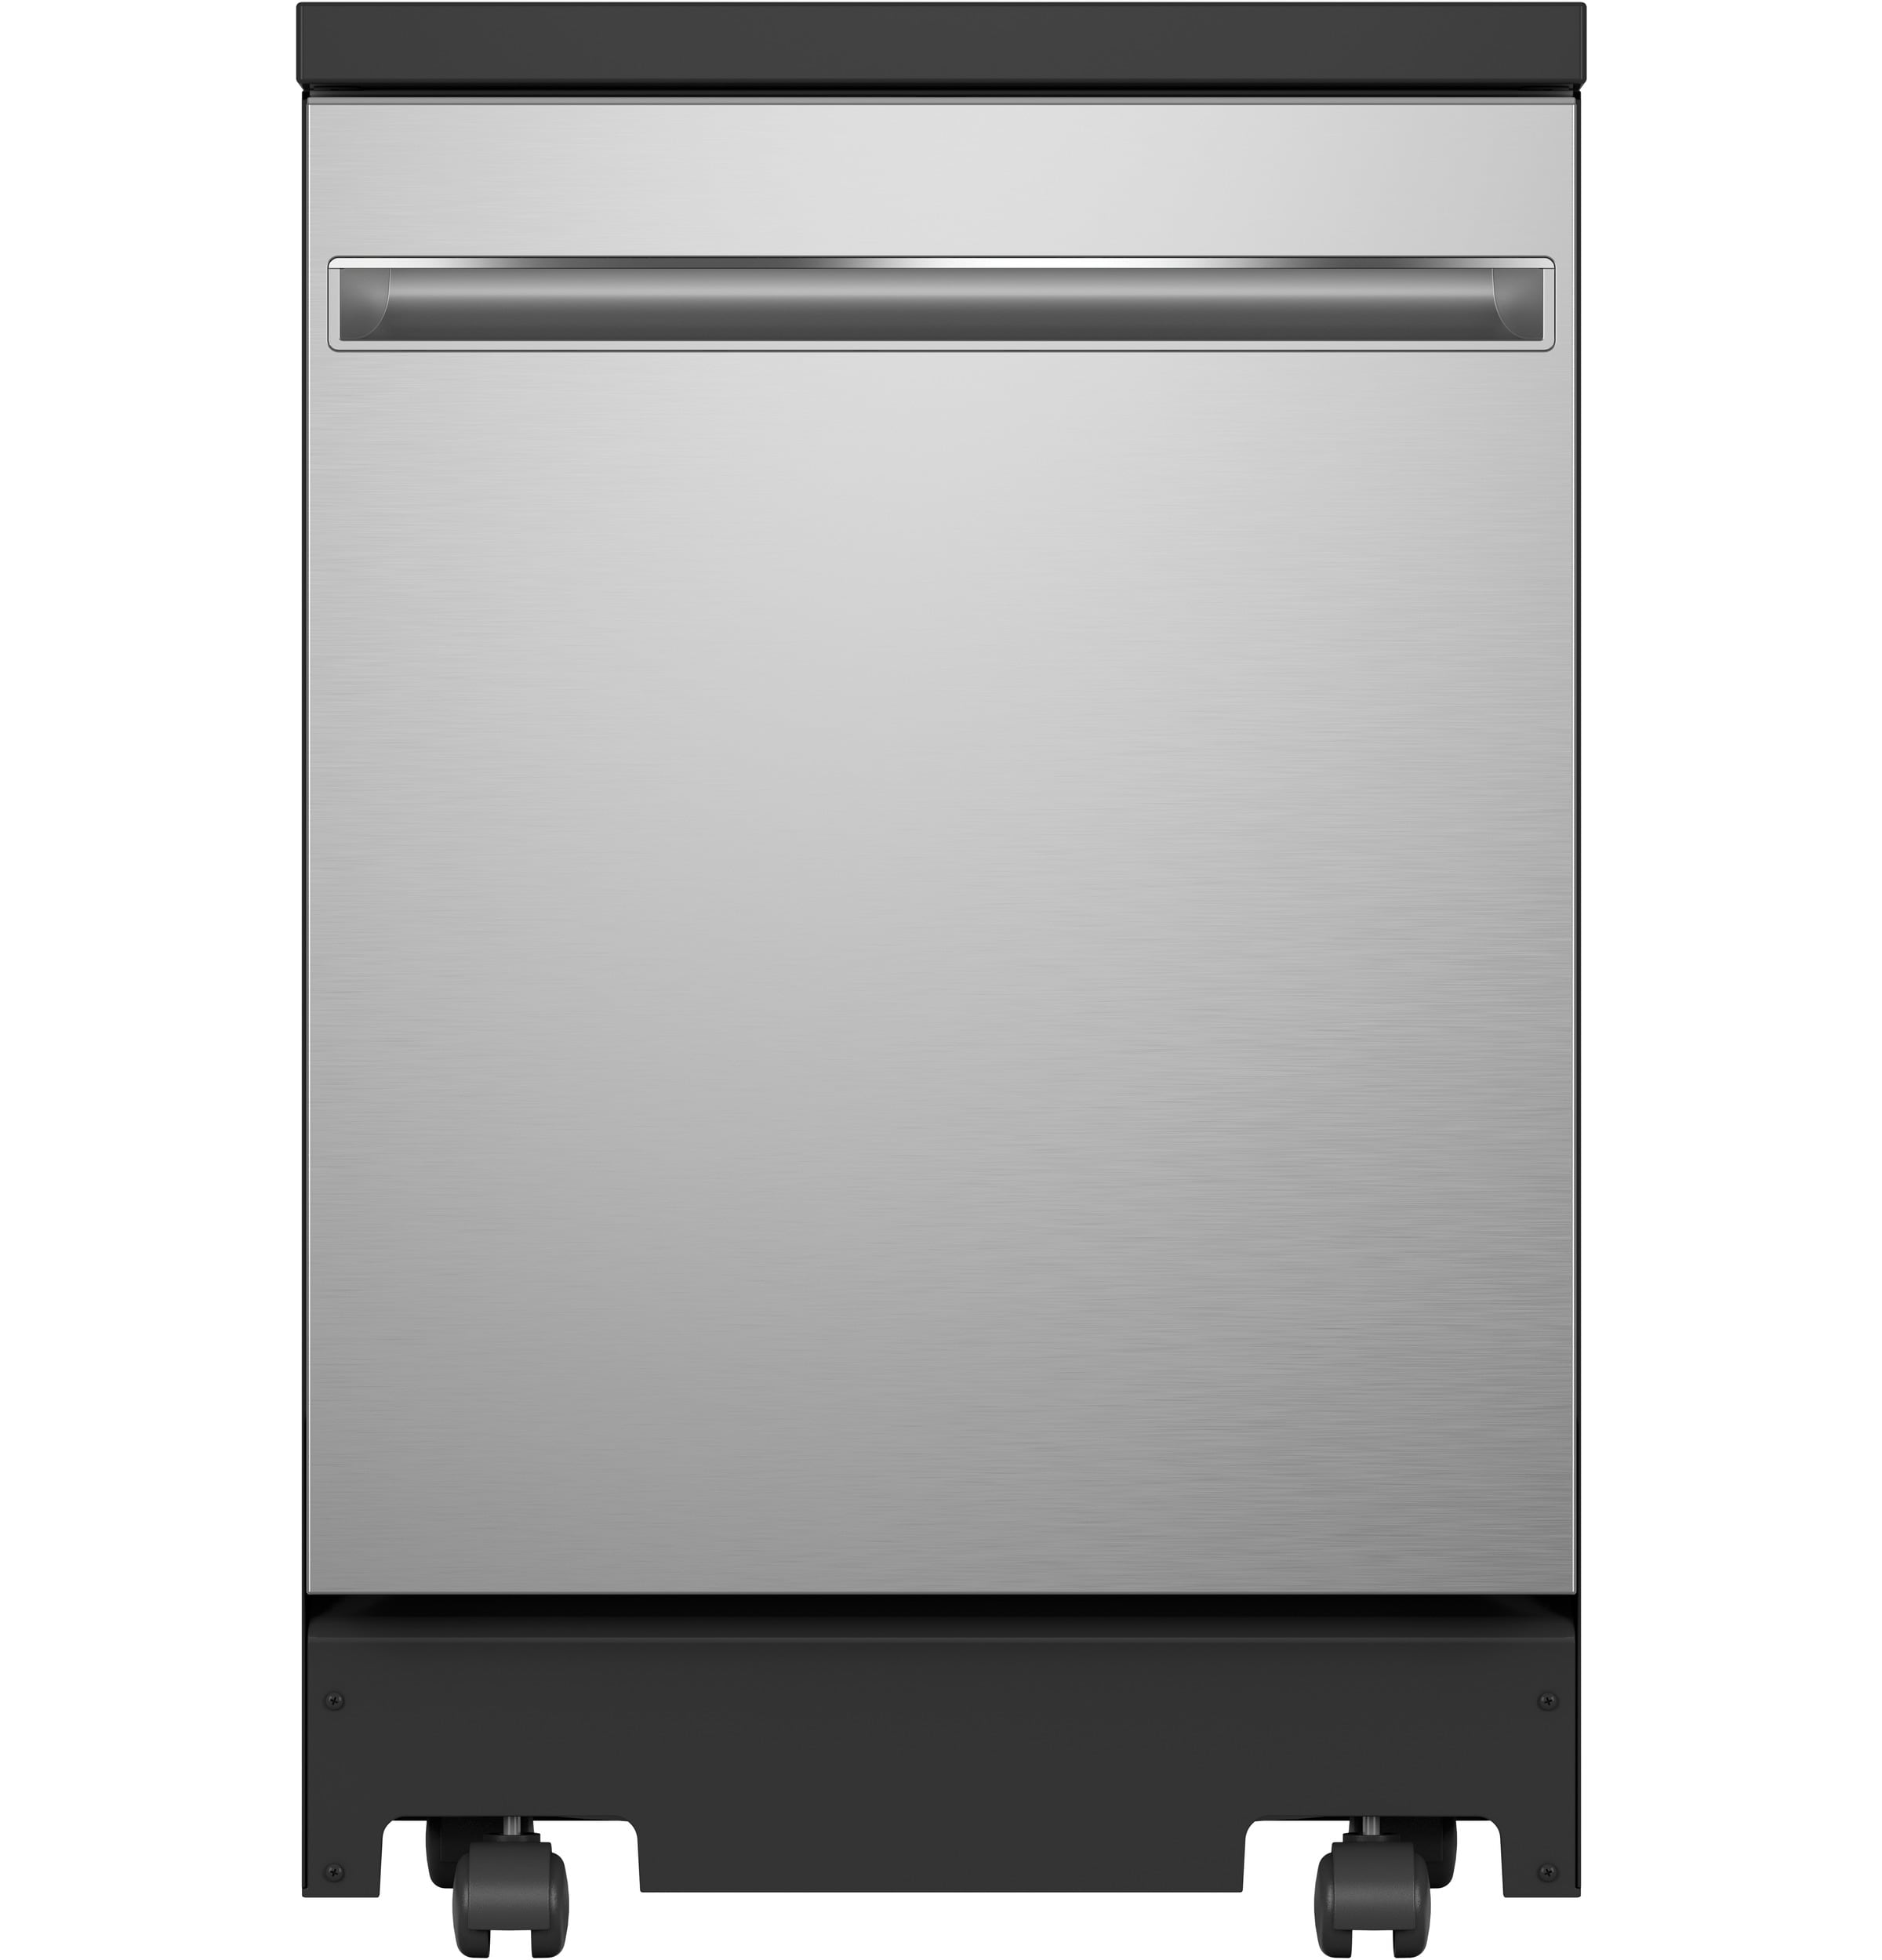 Black Decker Portable Dishwasher 35 1116 H x 17 1116 W x 23 58 D